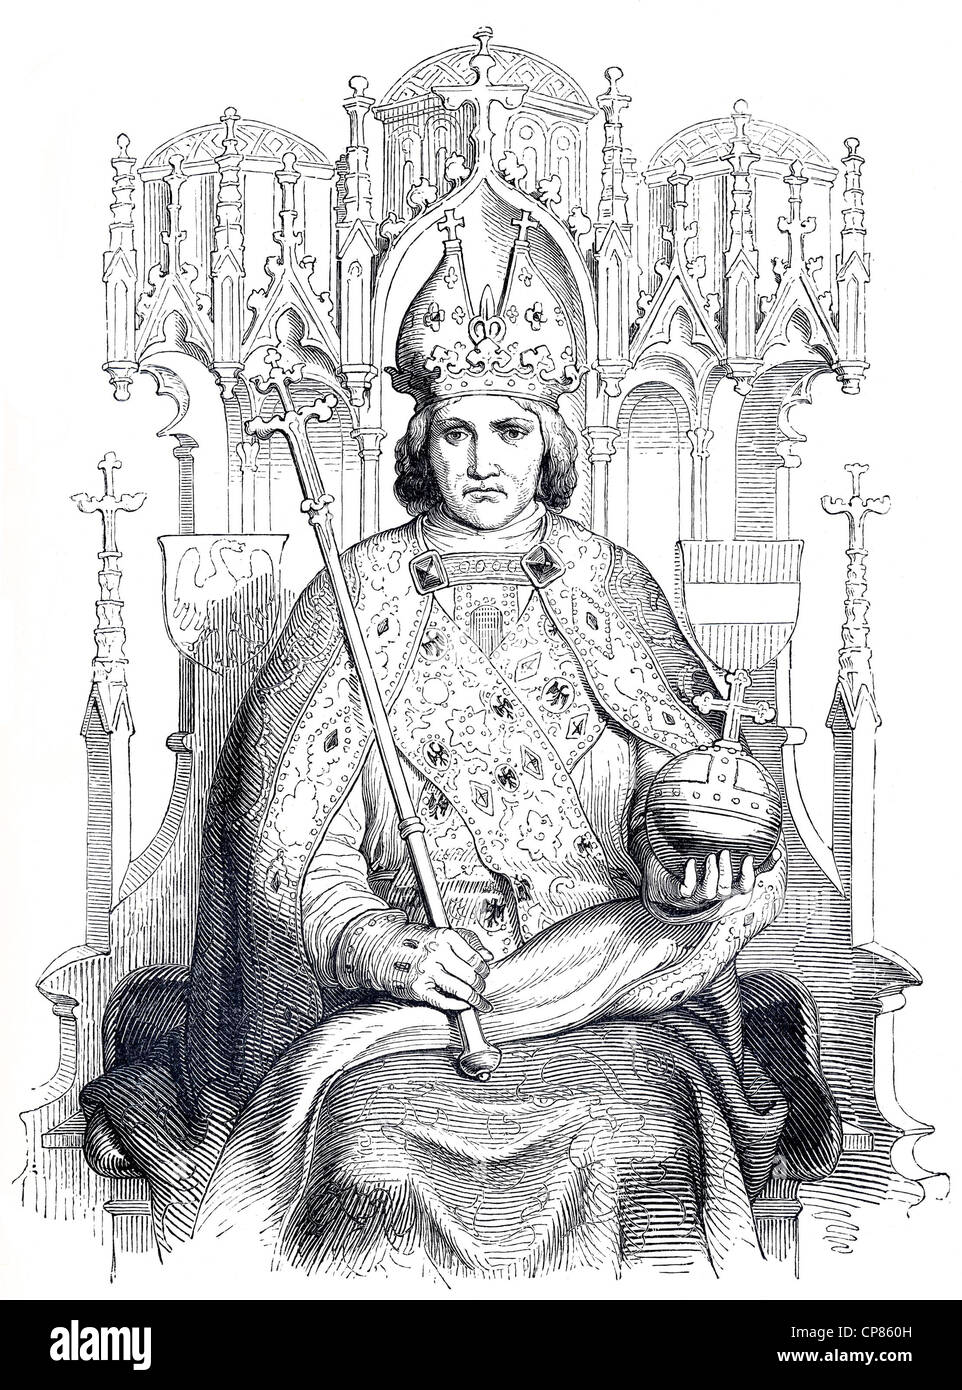 Federico III, 1415 - 1493, figura storica del XIX secolo, Friedrich III. (1415 - 1493) aus dem Hause Habsburg, als Frie Foto Stock